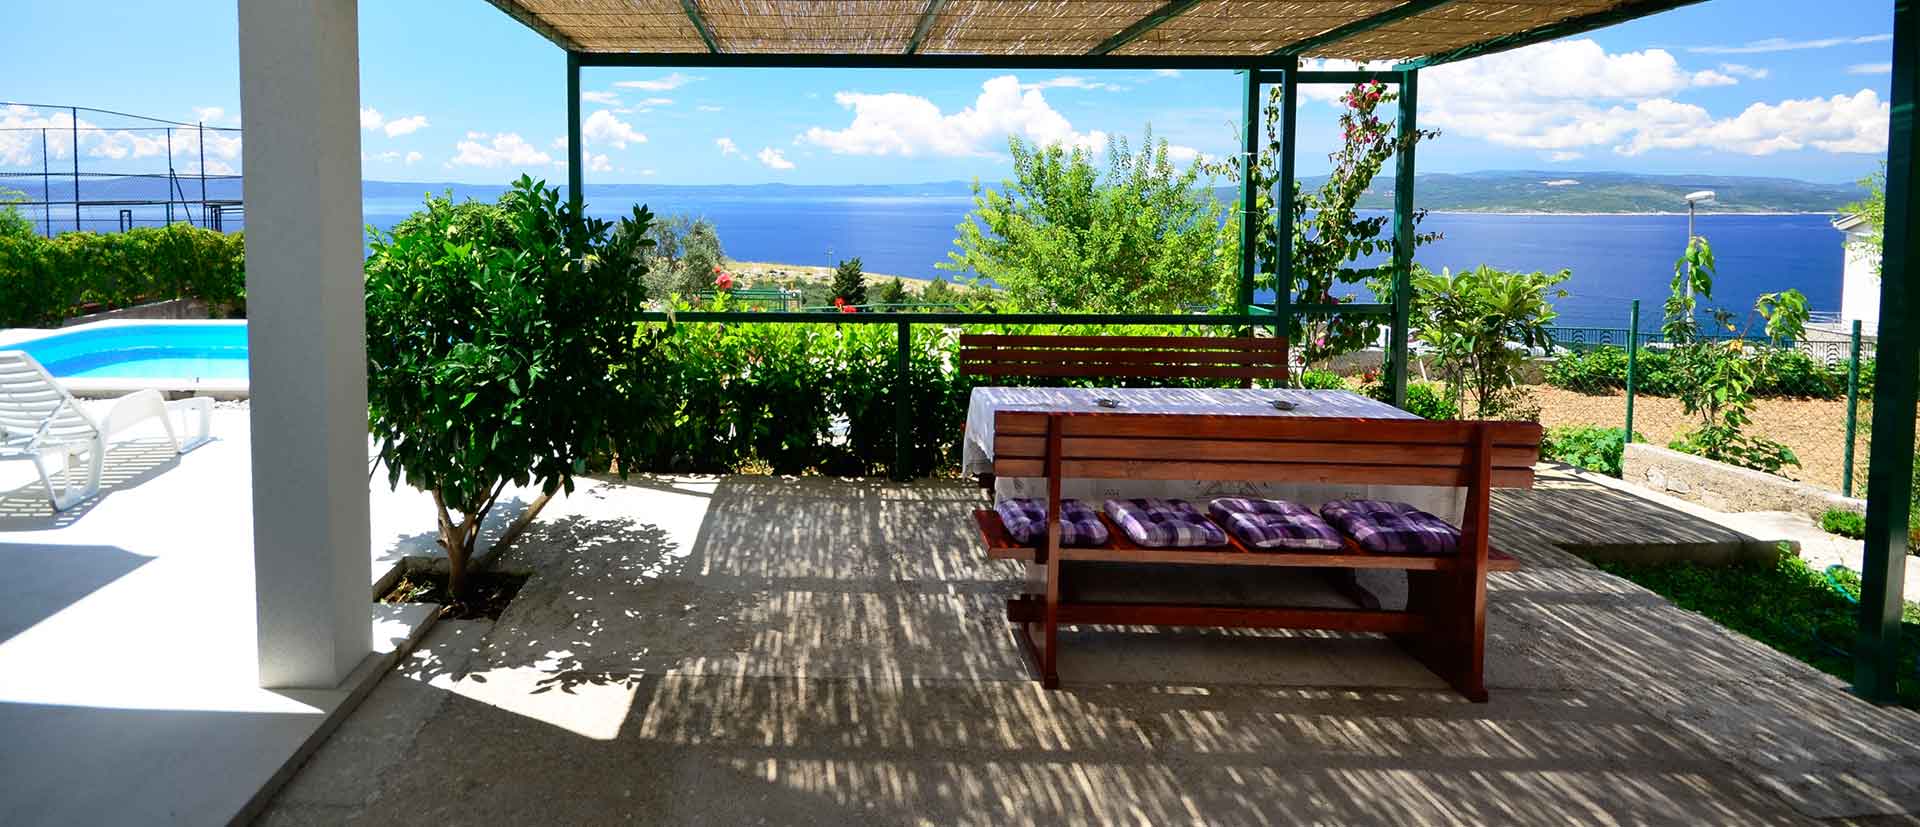 Croatia holiday home - Makarska house with pool - Semesterhus Kuk